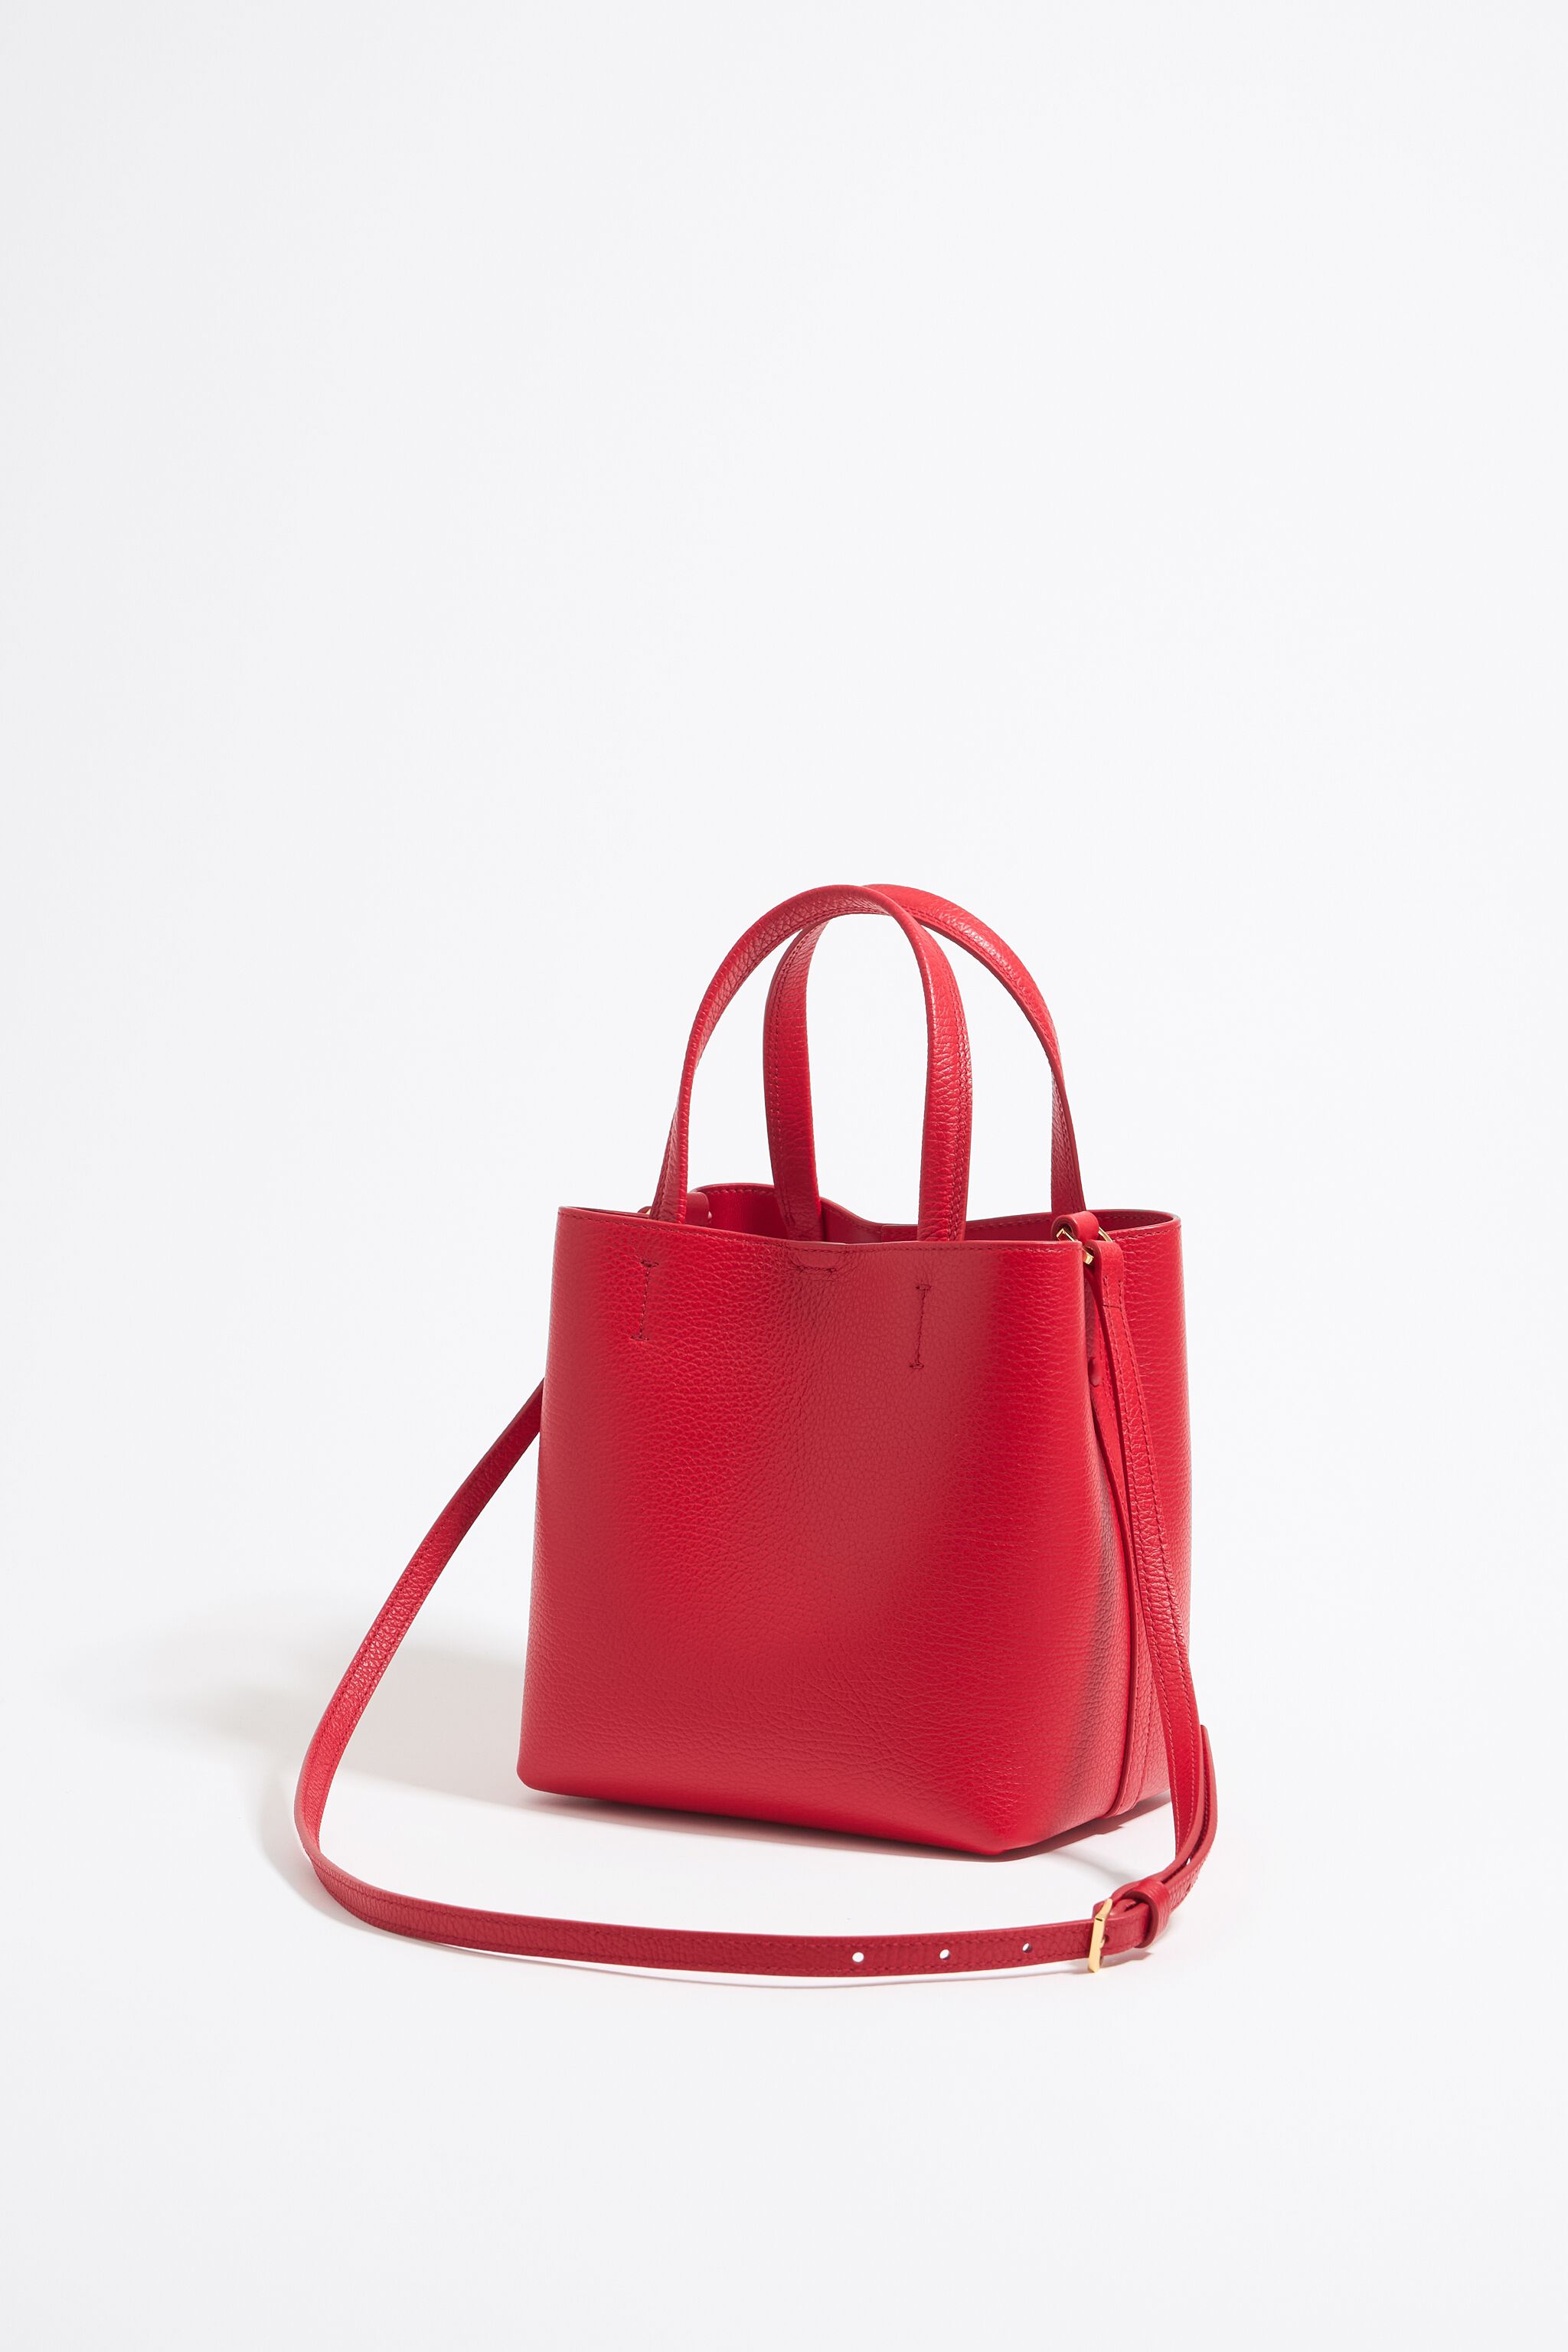 BNWT Zara Red Leather Bag | Red leather bag, Red leather, Leather bag